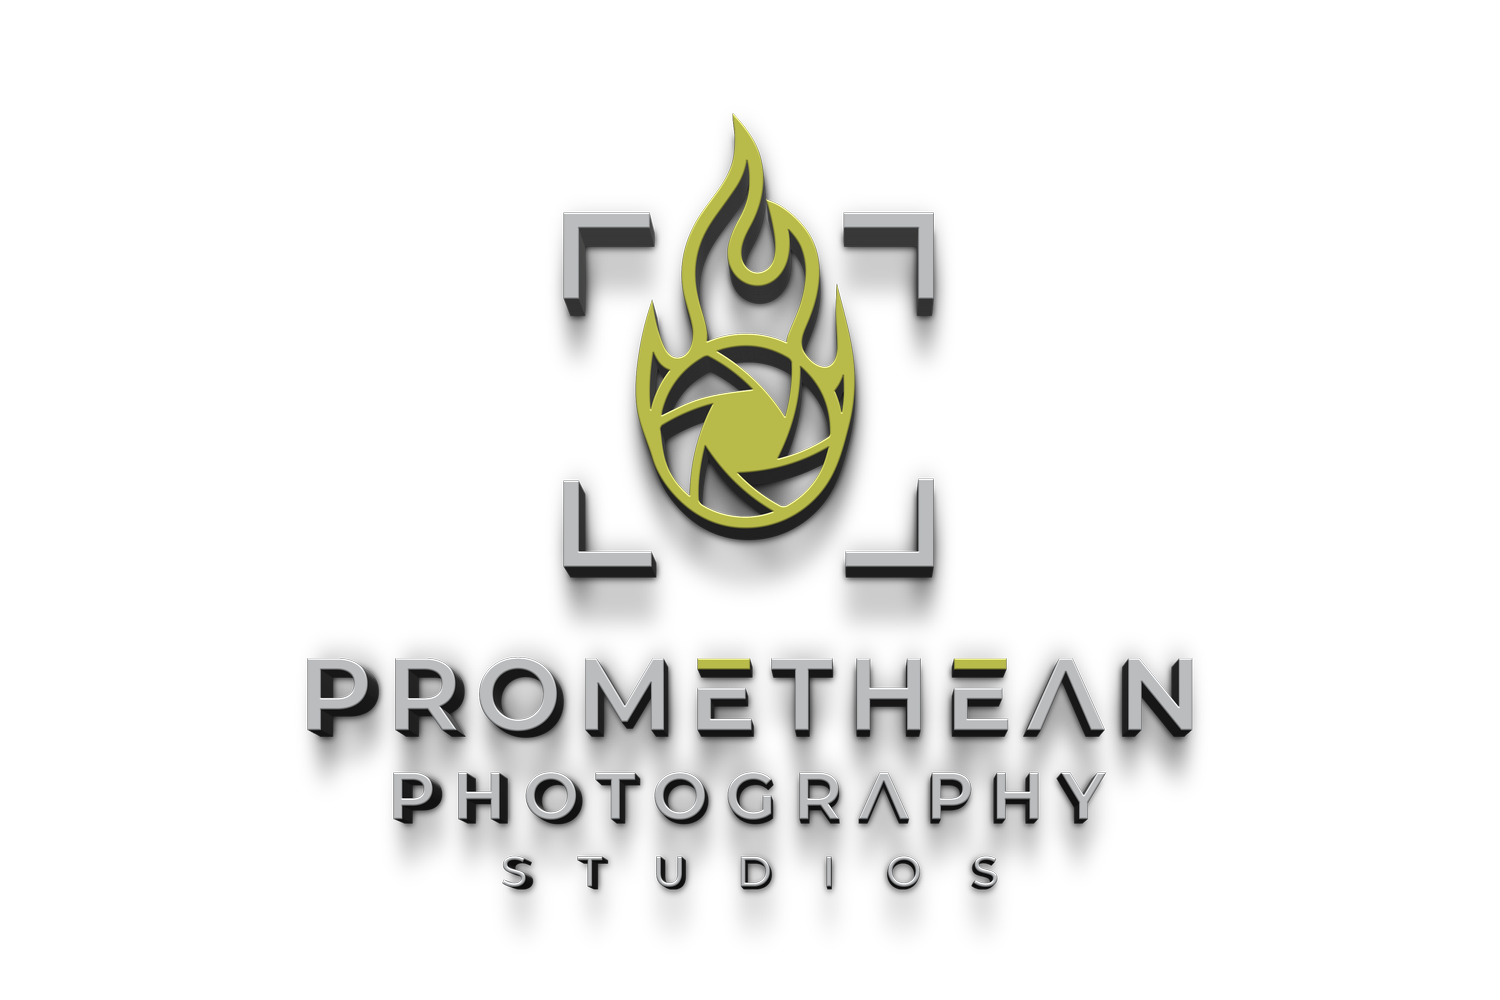 Promethean Photography Studios